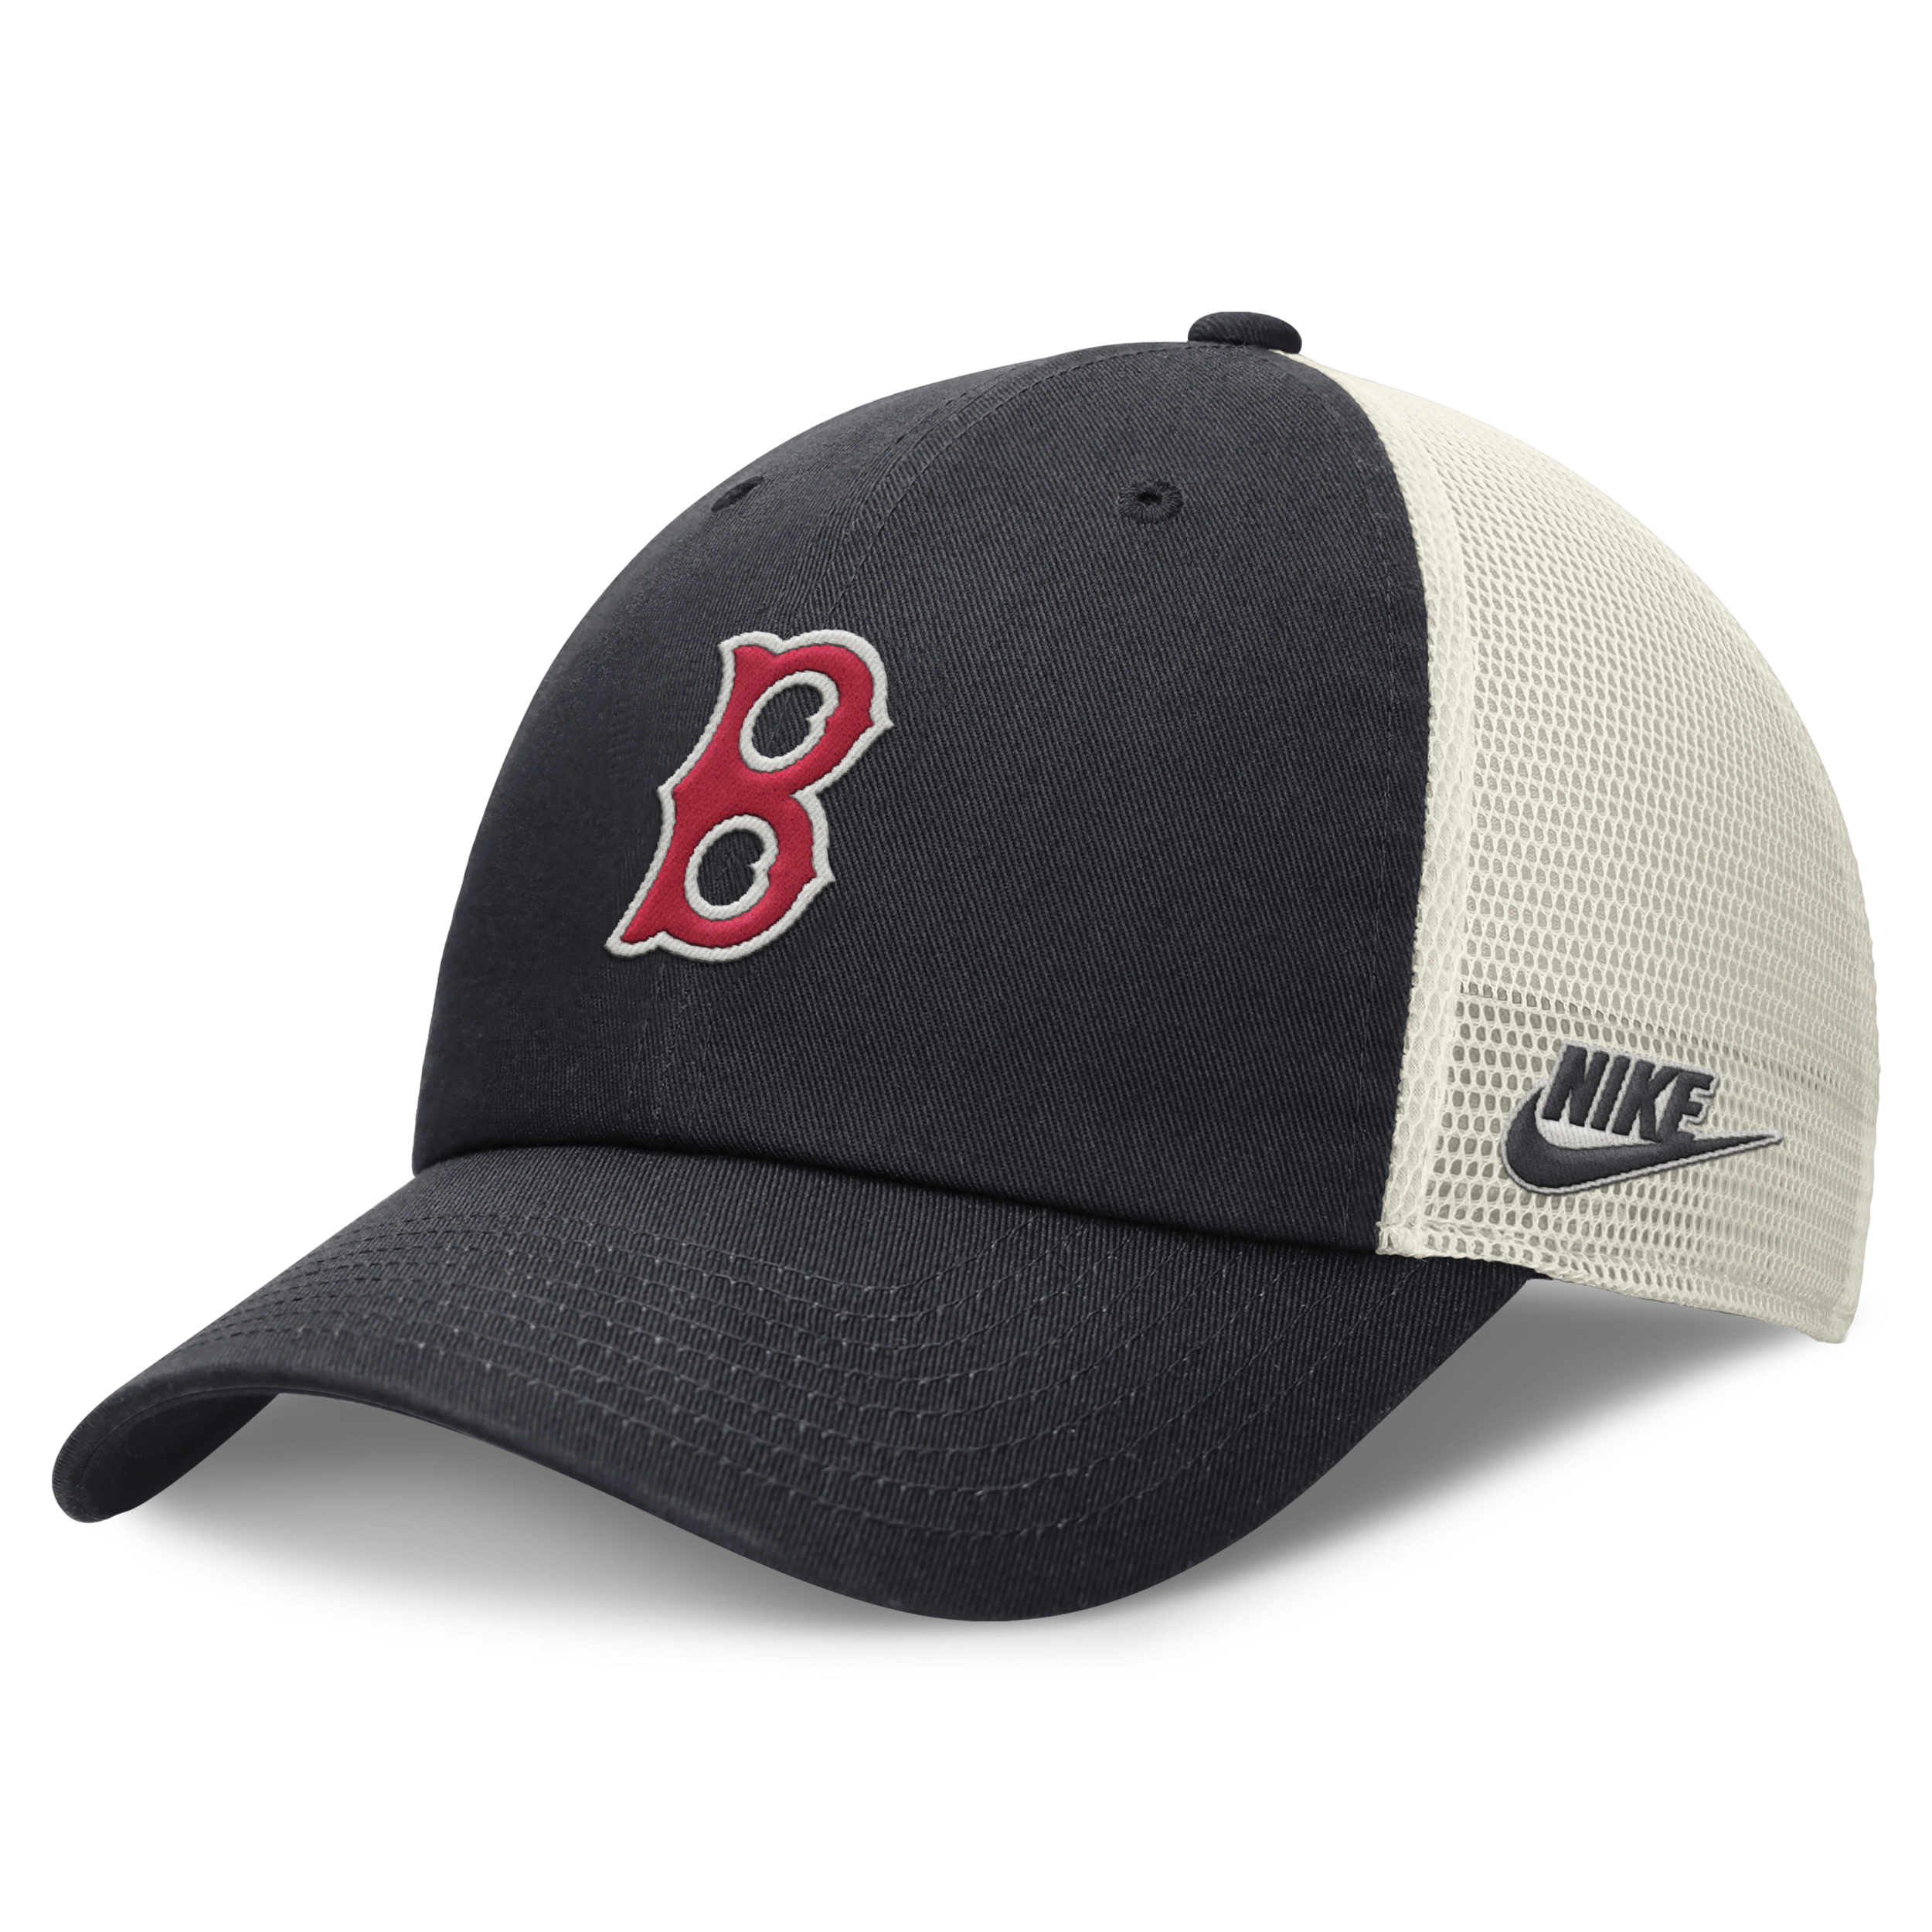 NIKE BOSTON RED SOX REWIND COOPERSTOWN CLUB  MEN'S MLB TRUCKER ADJUSTABLE HAT,1015508877